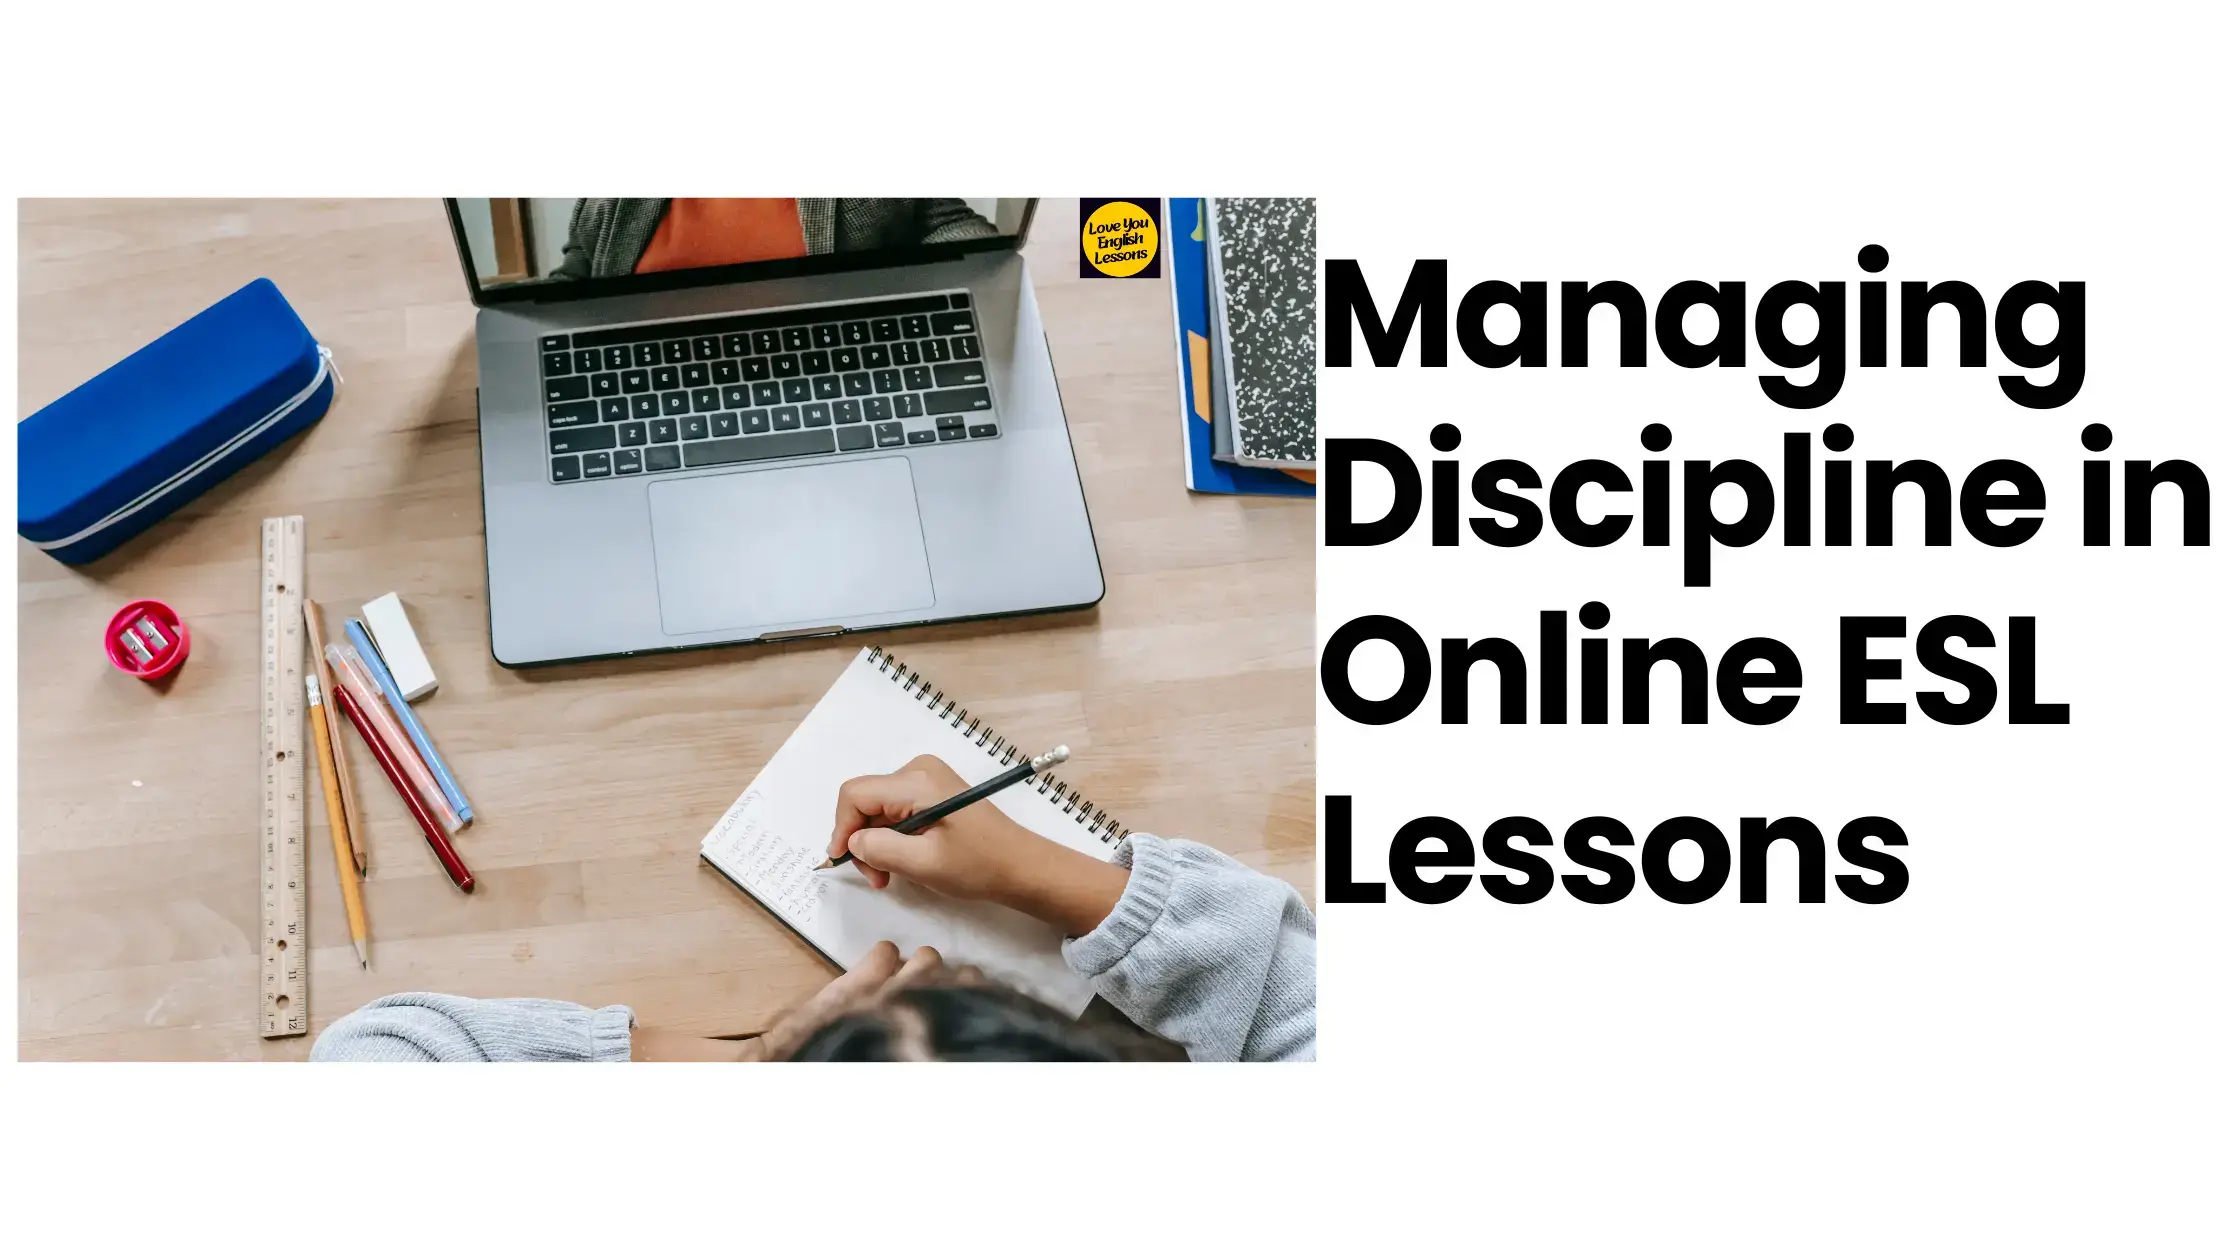 Managing discipline in online ESL lessons